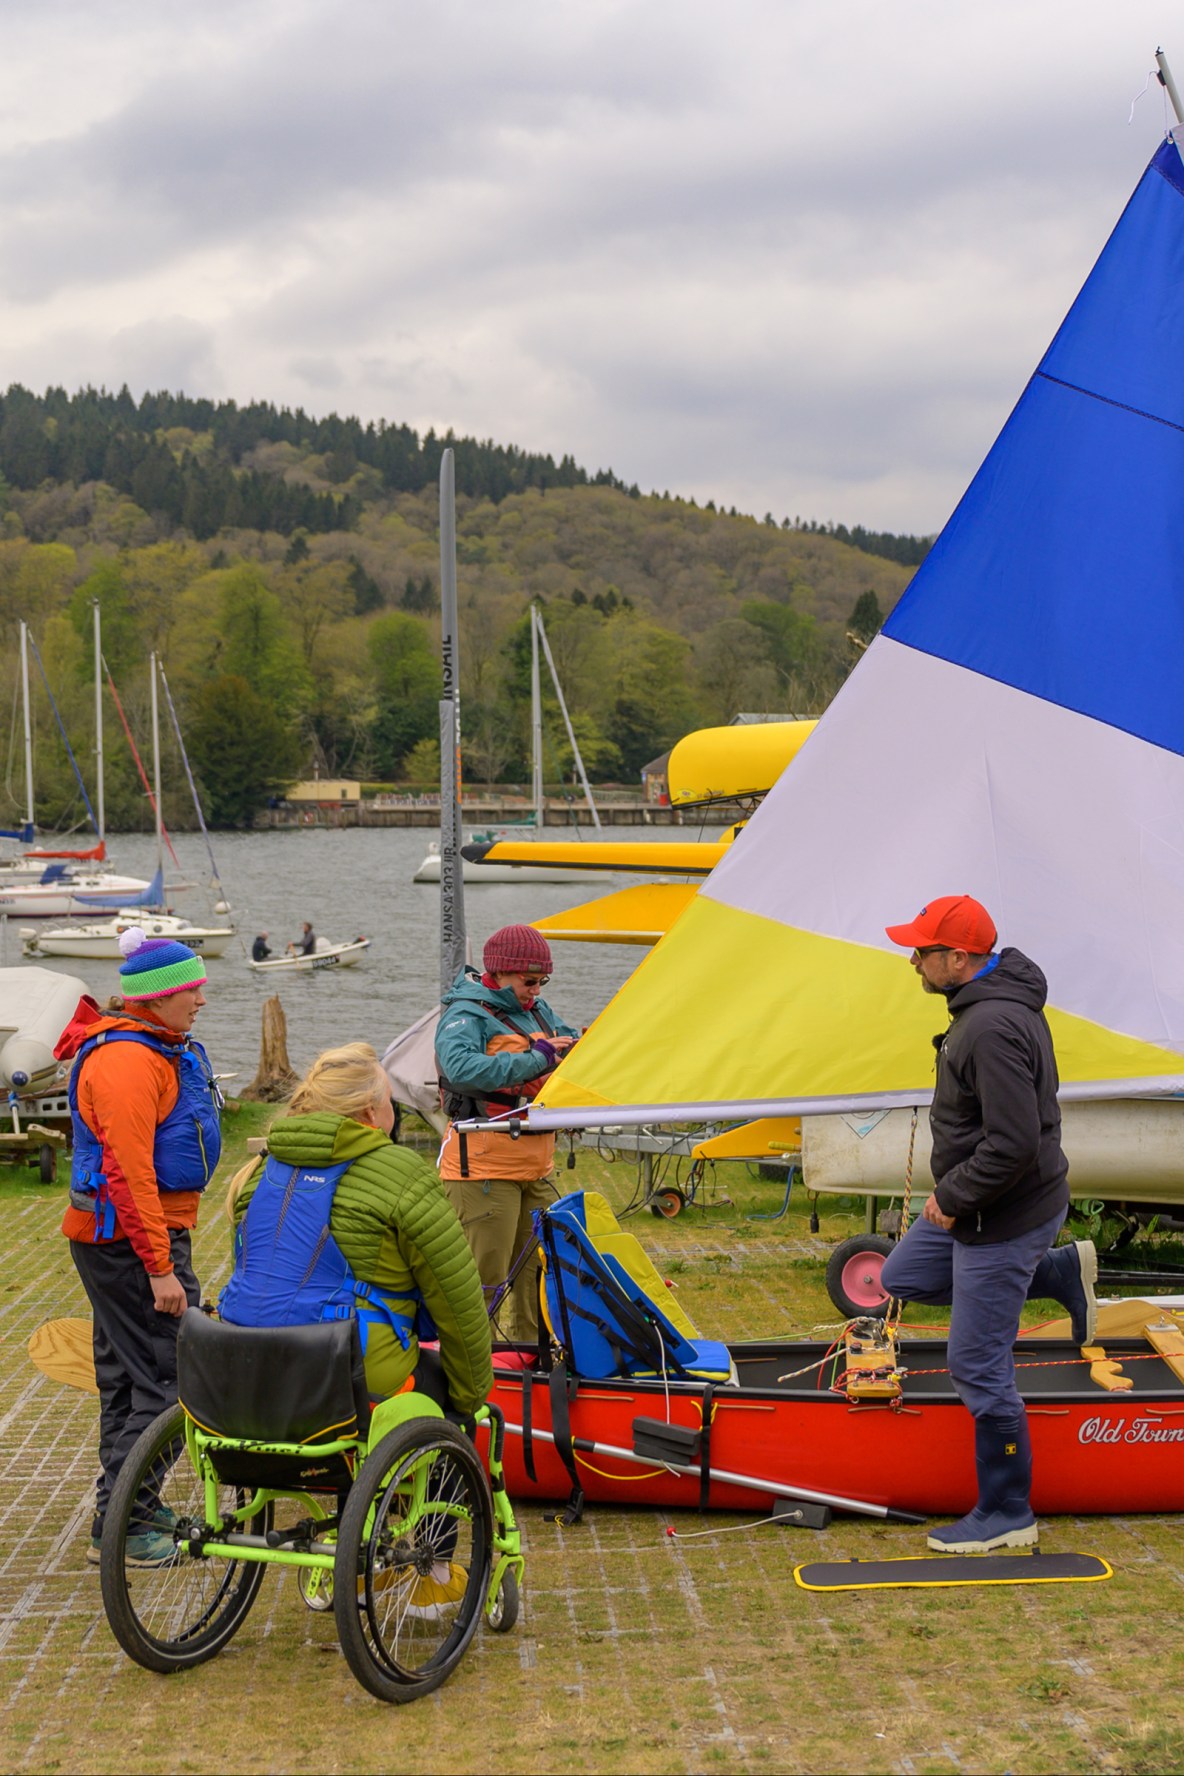 Several guests preparing to go canoe sailing on the lake in Newby Bridge, United Kingdom